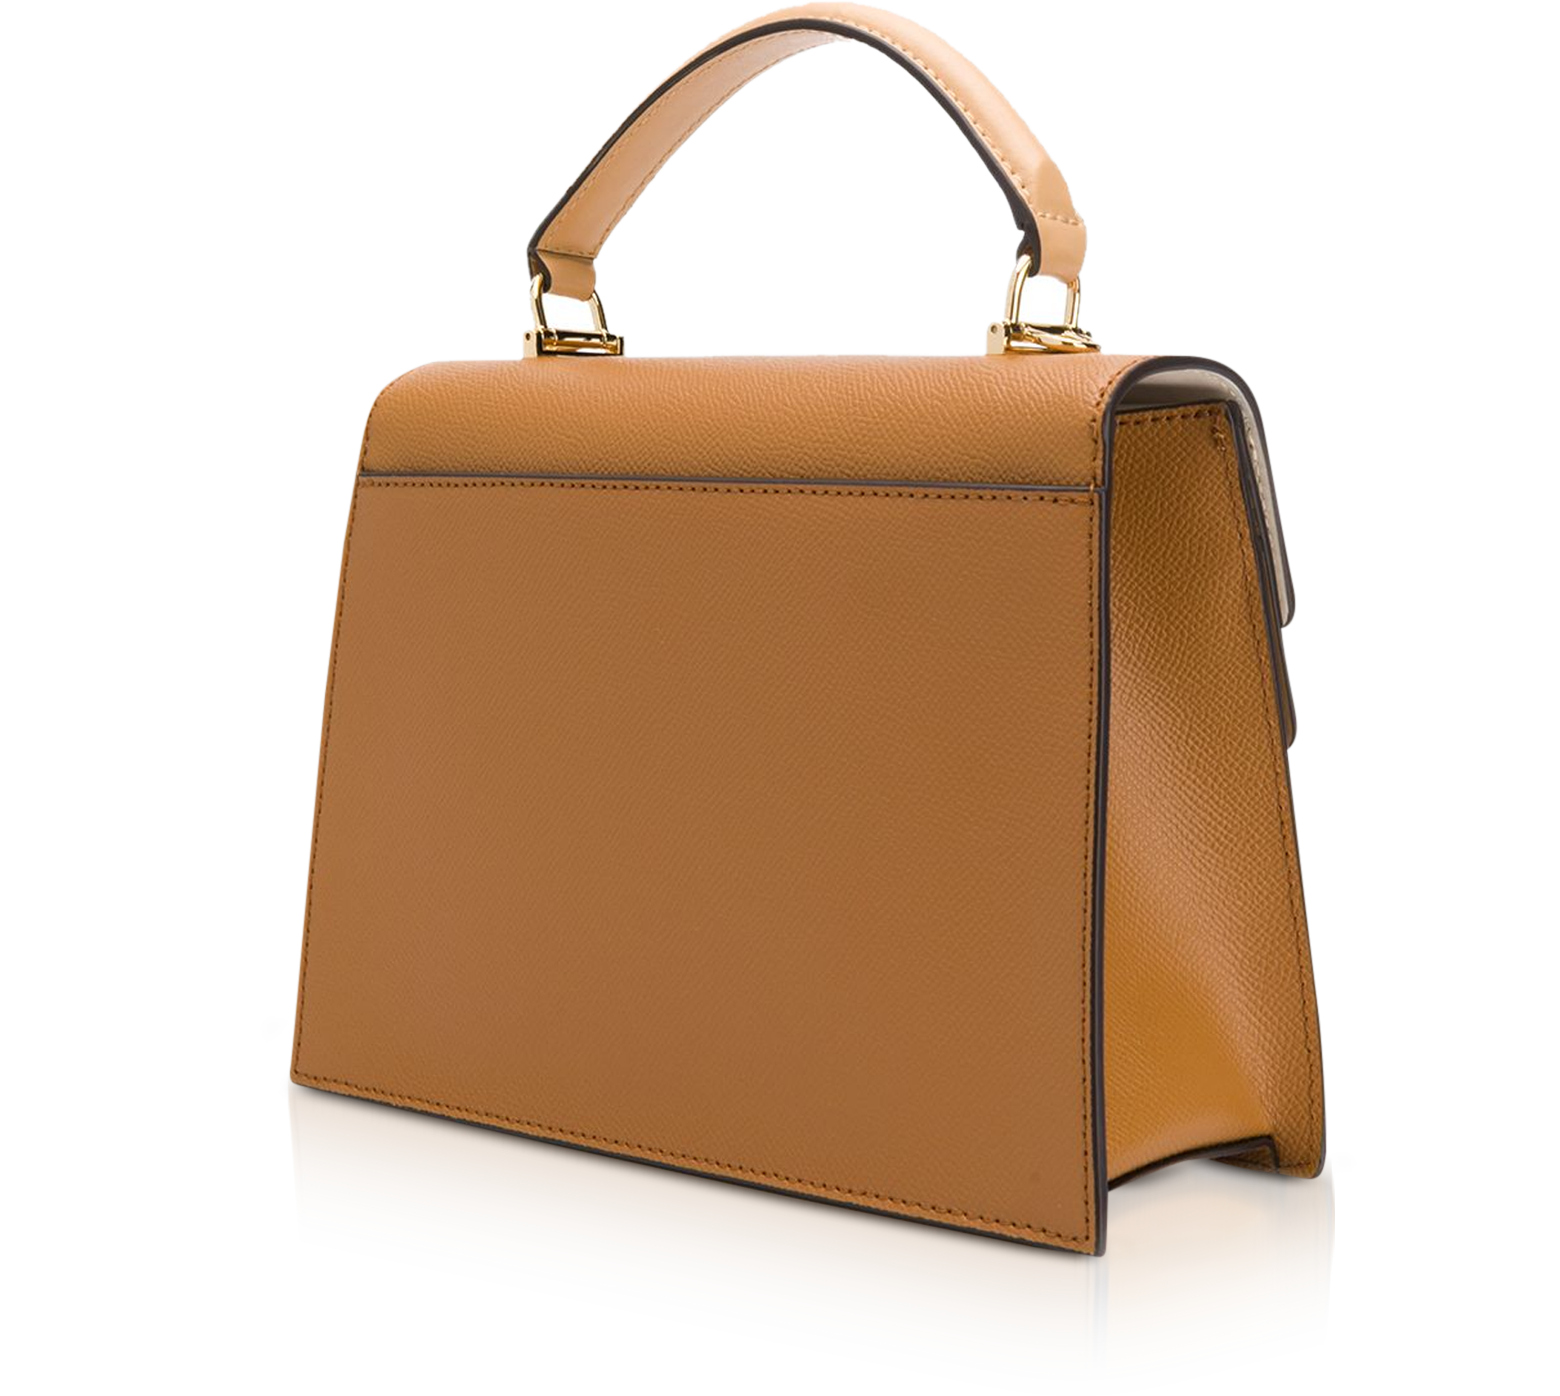 Hand Handled Brown Michael Kors Handbag, For Casual Wear, 1 Kg